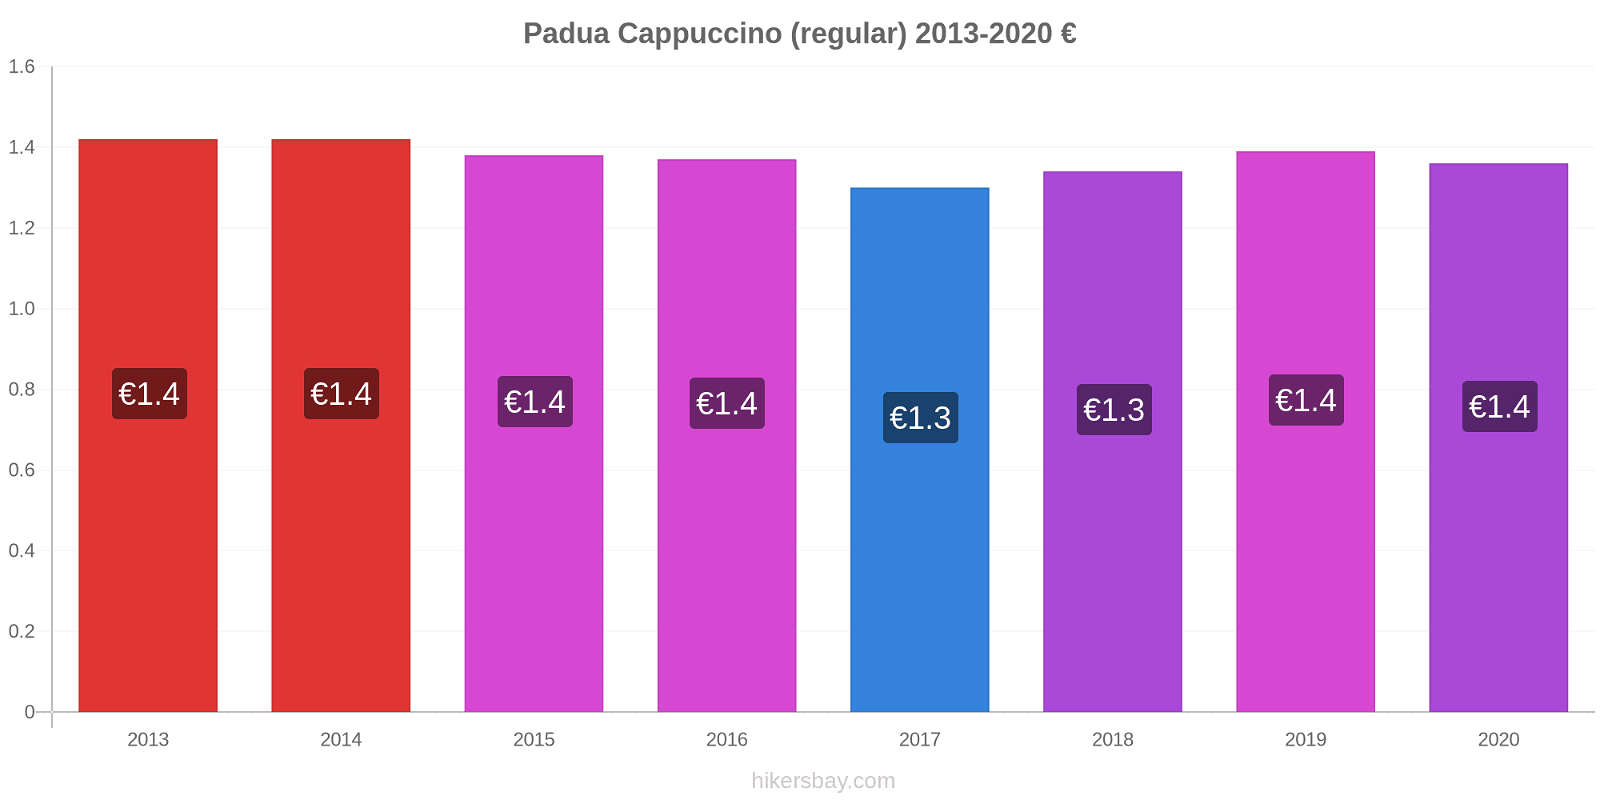 Padua price changes Cappuccino (regular) hikersbay.com